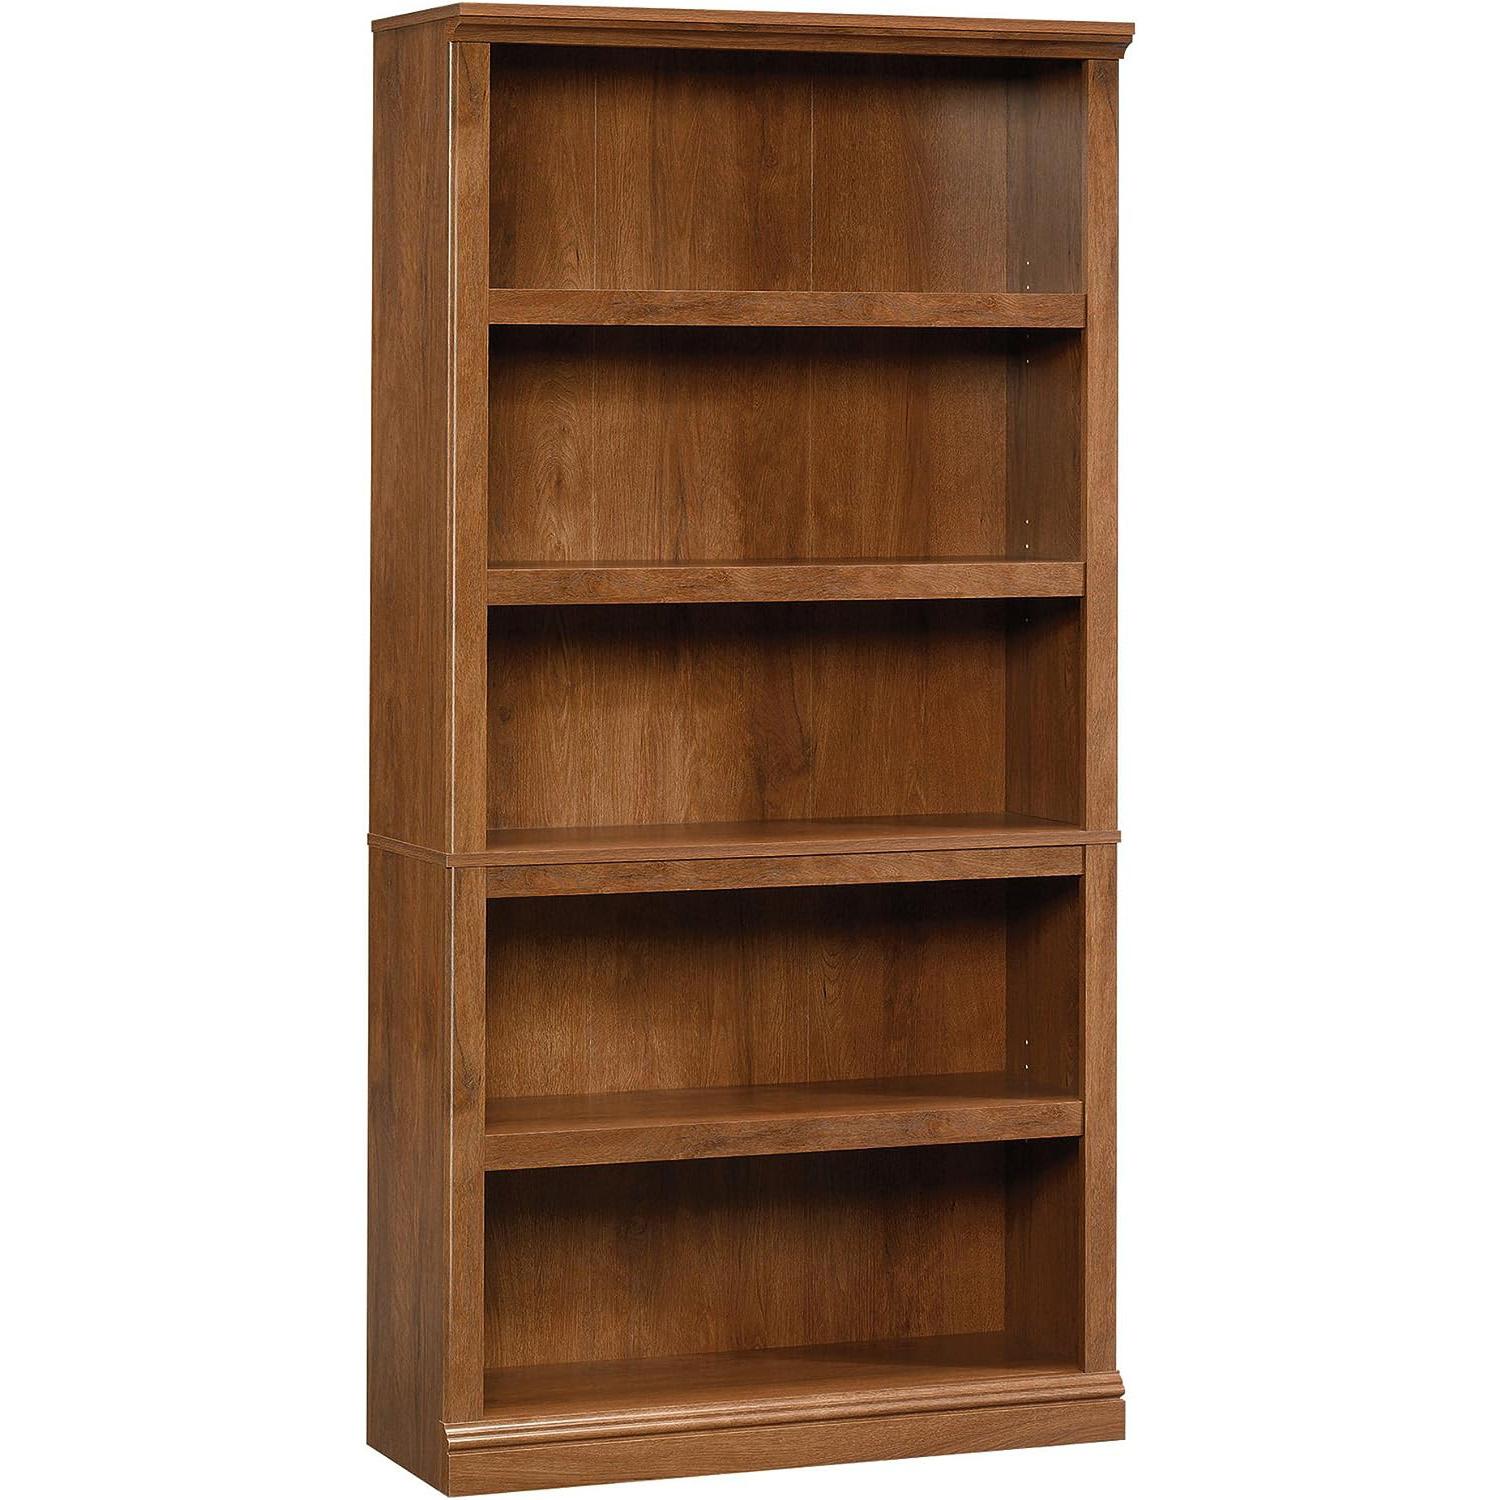 Sauder Miscellaneous Storage 5 Split Bookcase Book Shelf for $99.99 Shipped